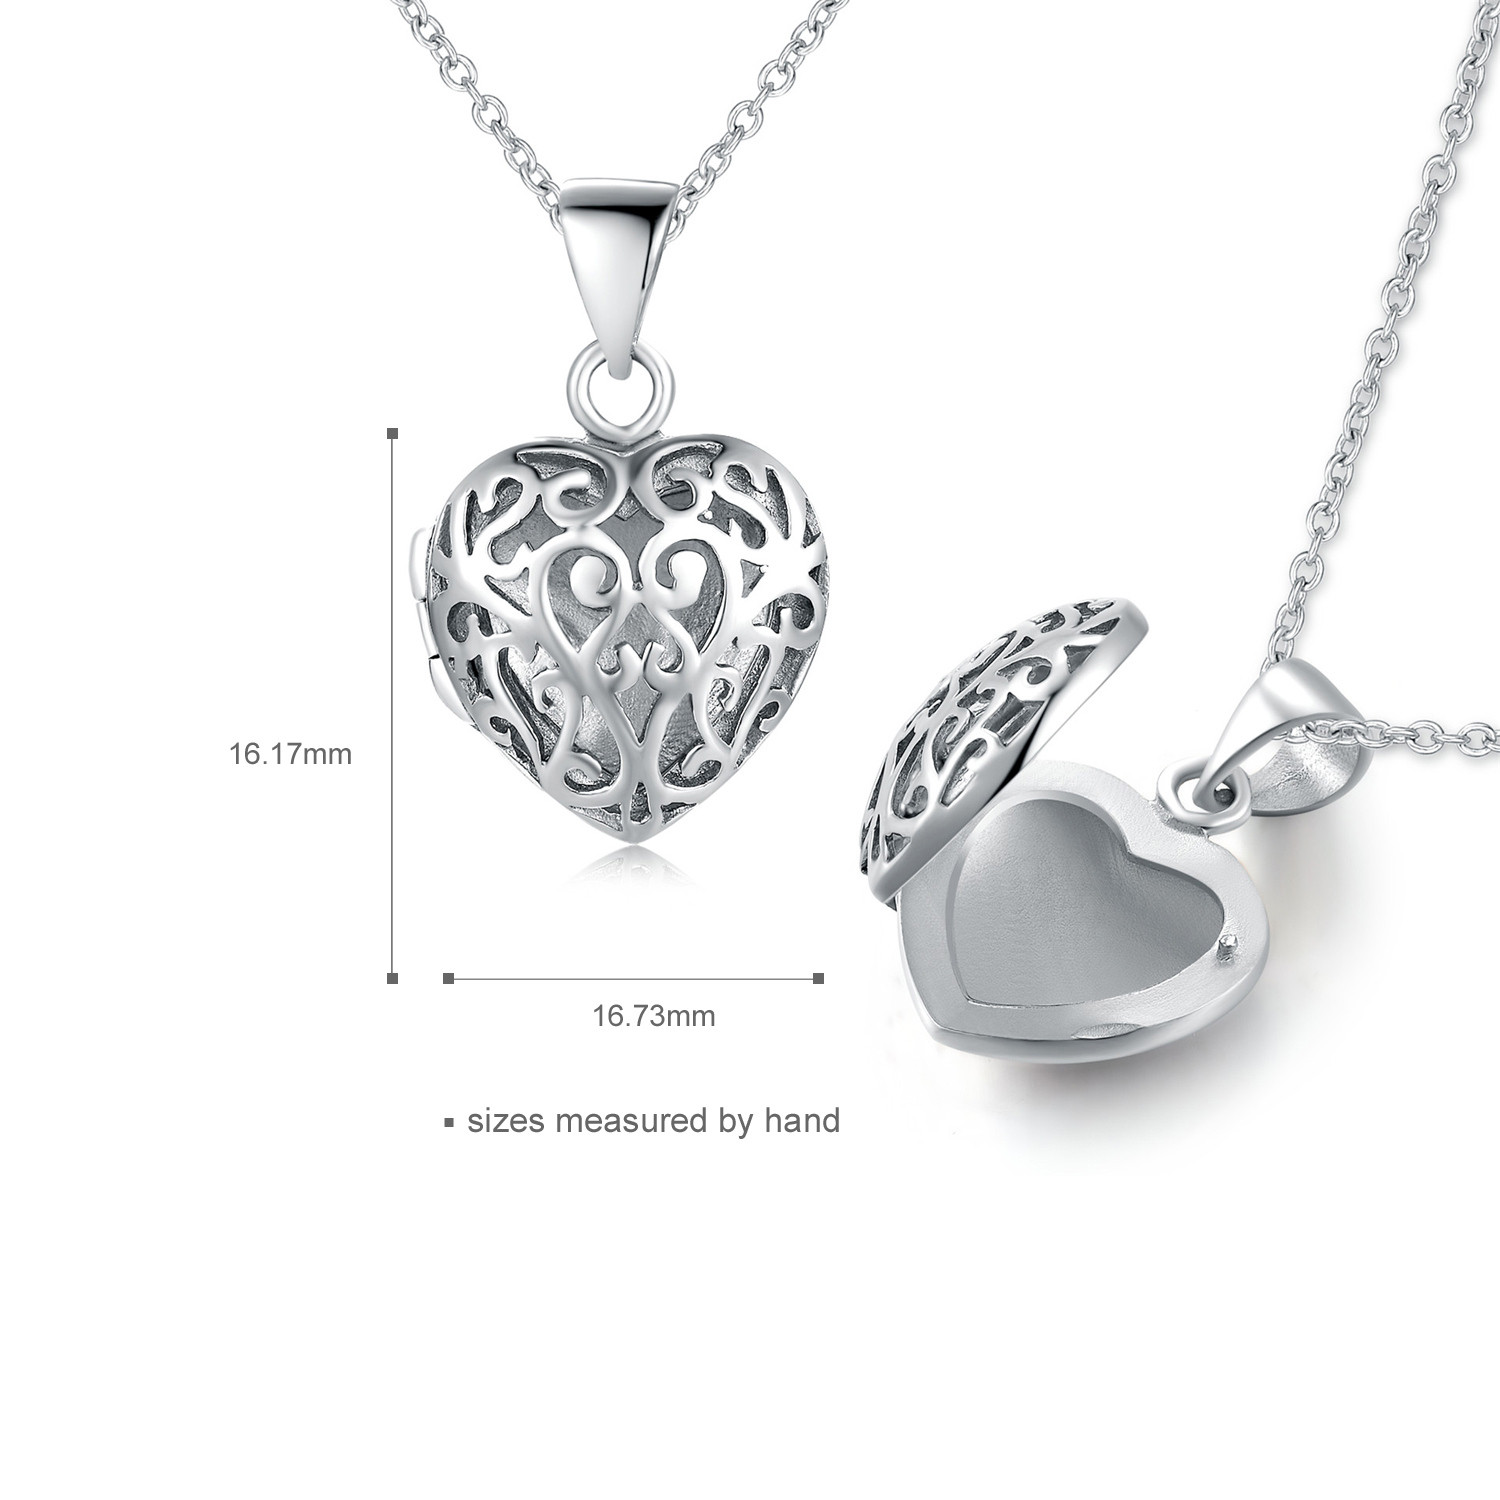  Manufacturer hot sale  925 Silver personalized Photo Locket hollow heart shape pendant necklace  (图2)